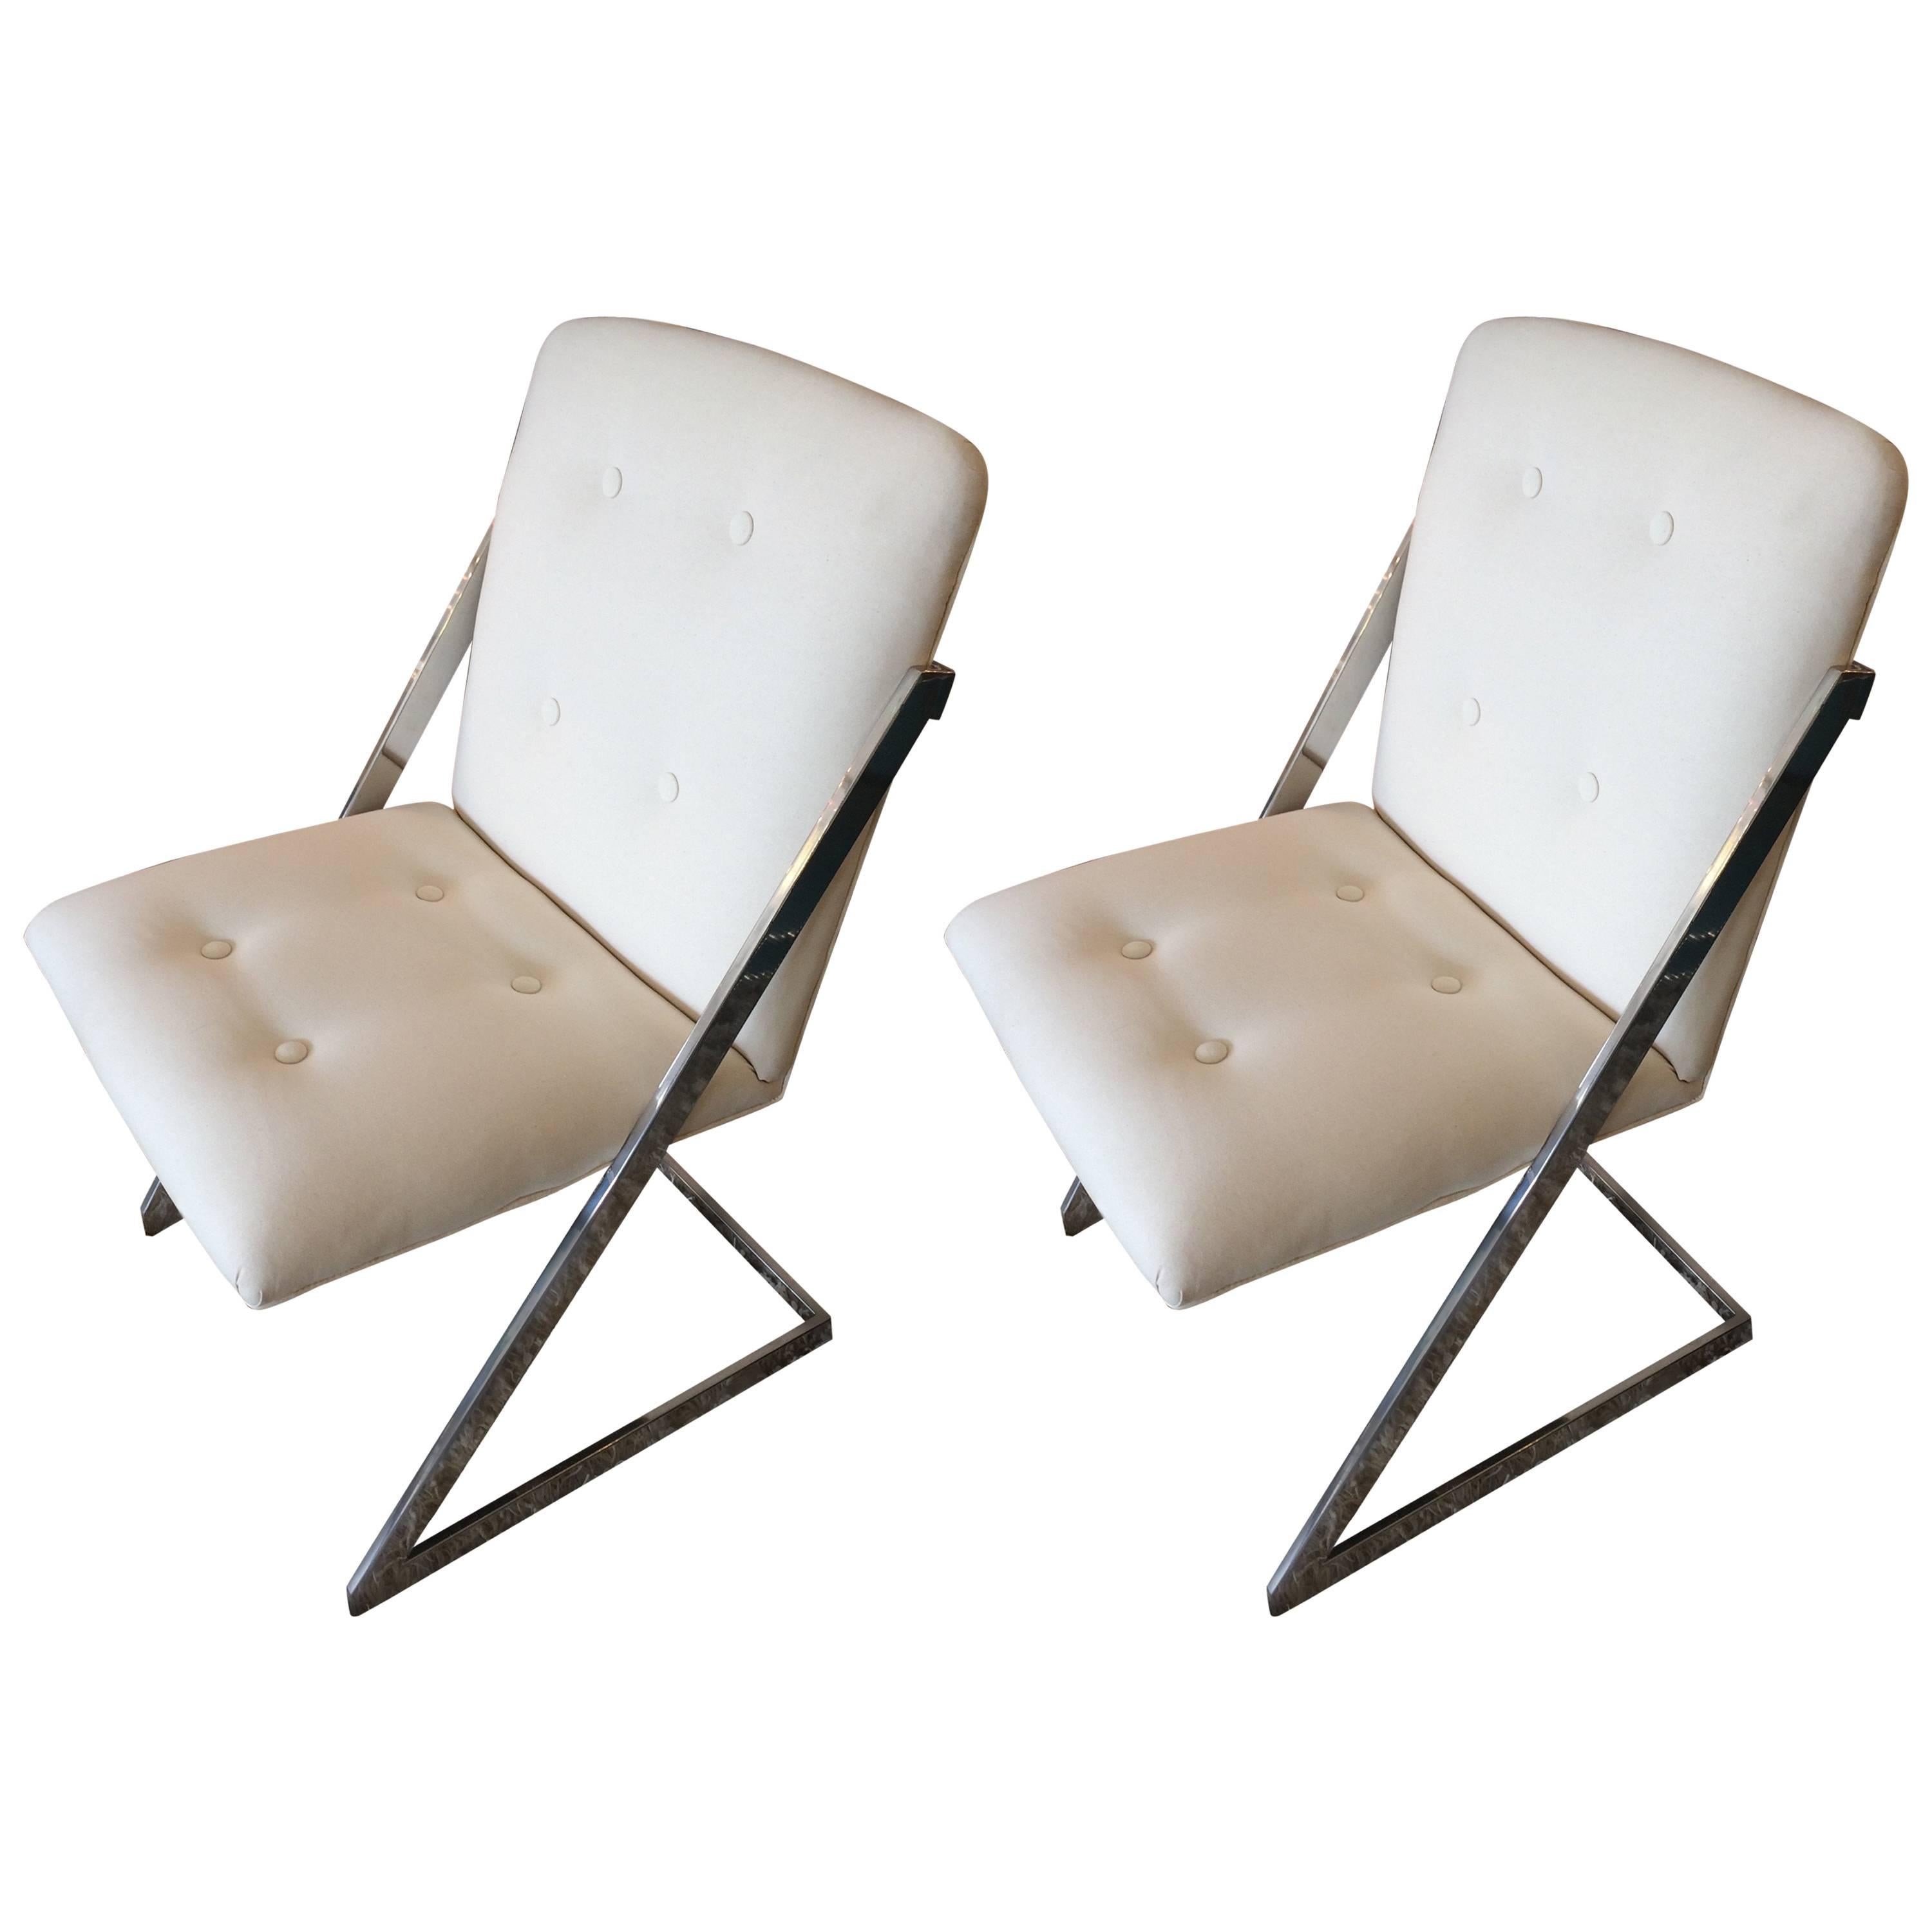 Sleek Pair of Chrome and White Duck Mid-Century Modern Chairs